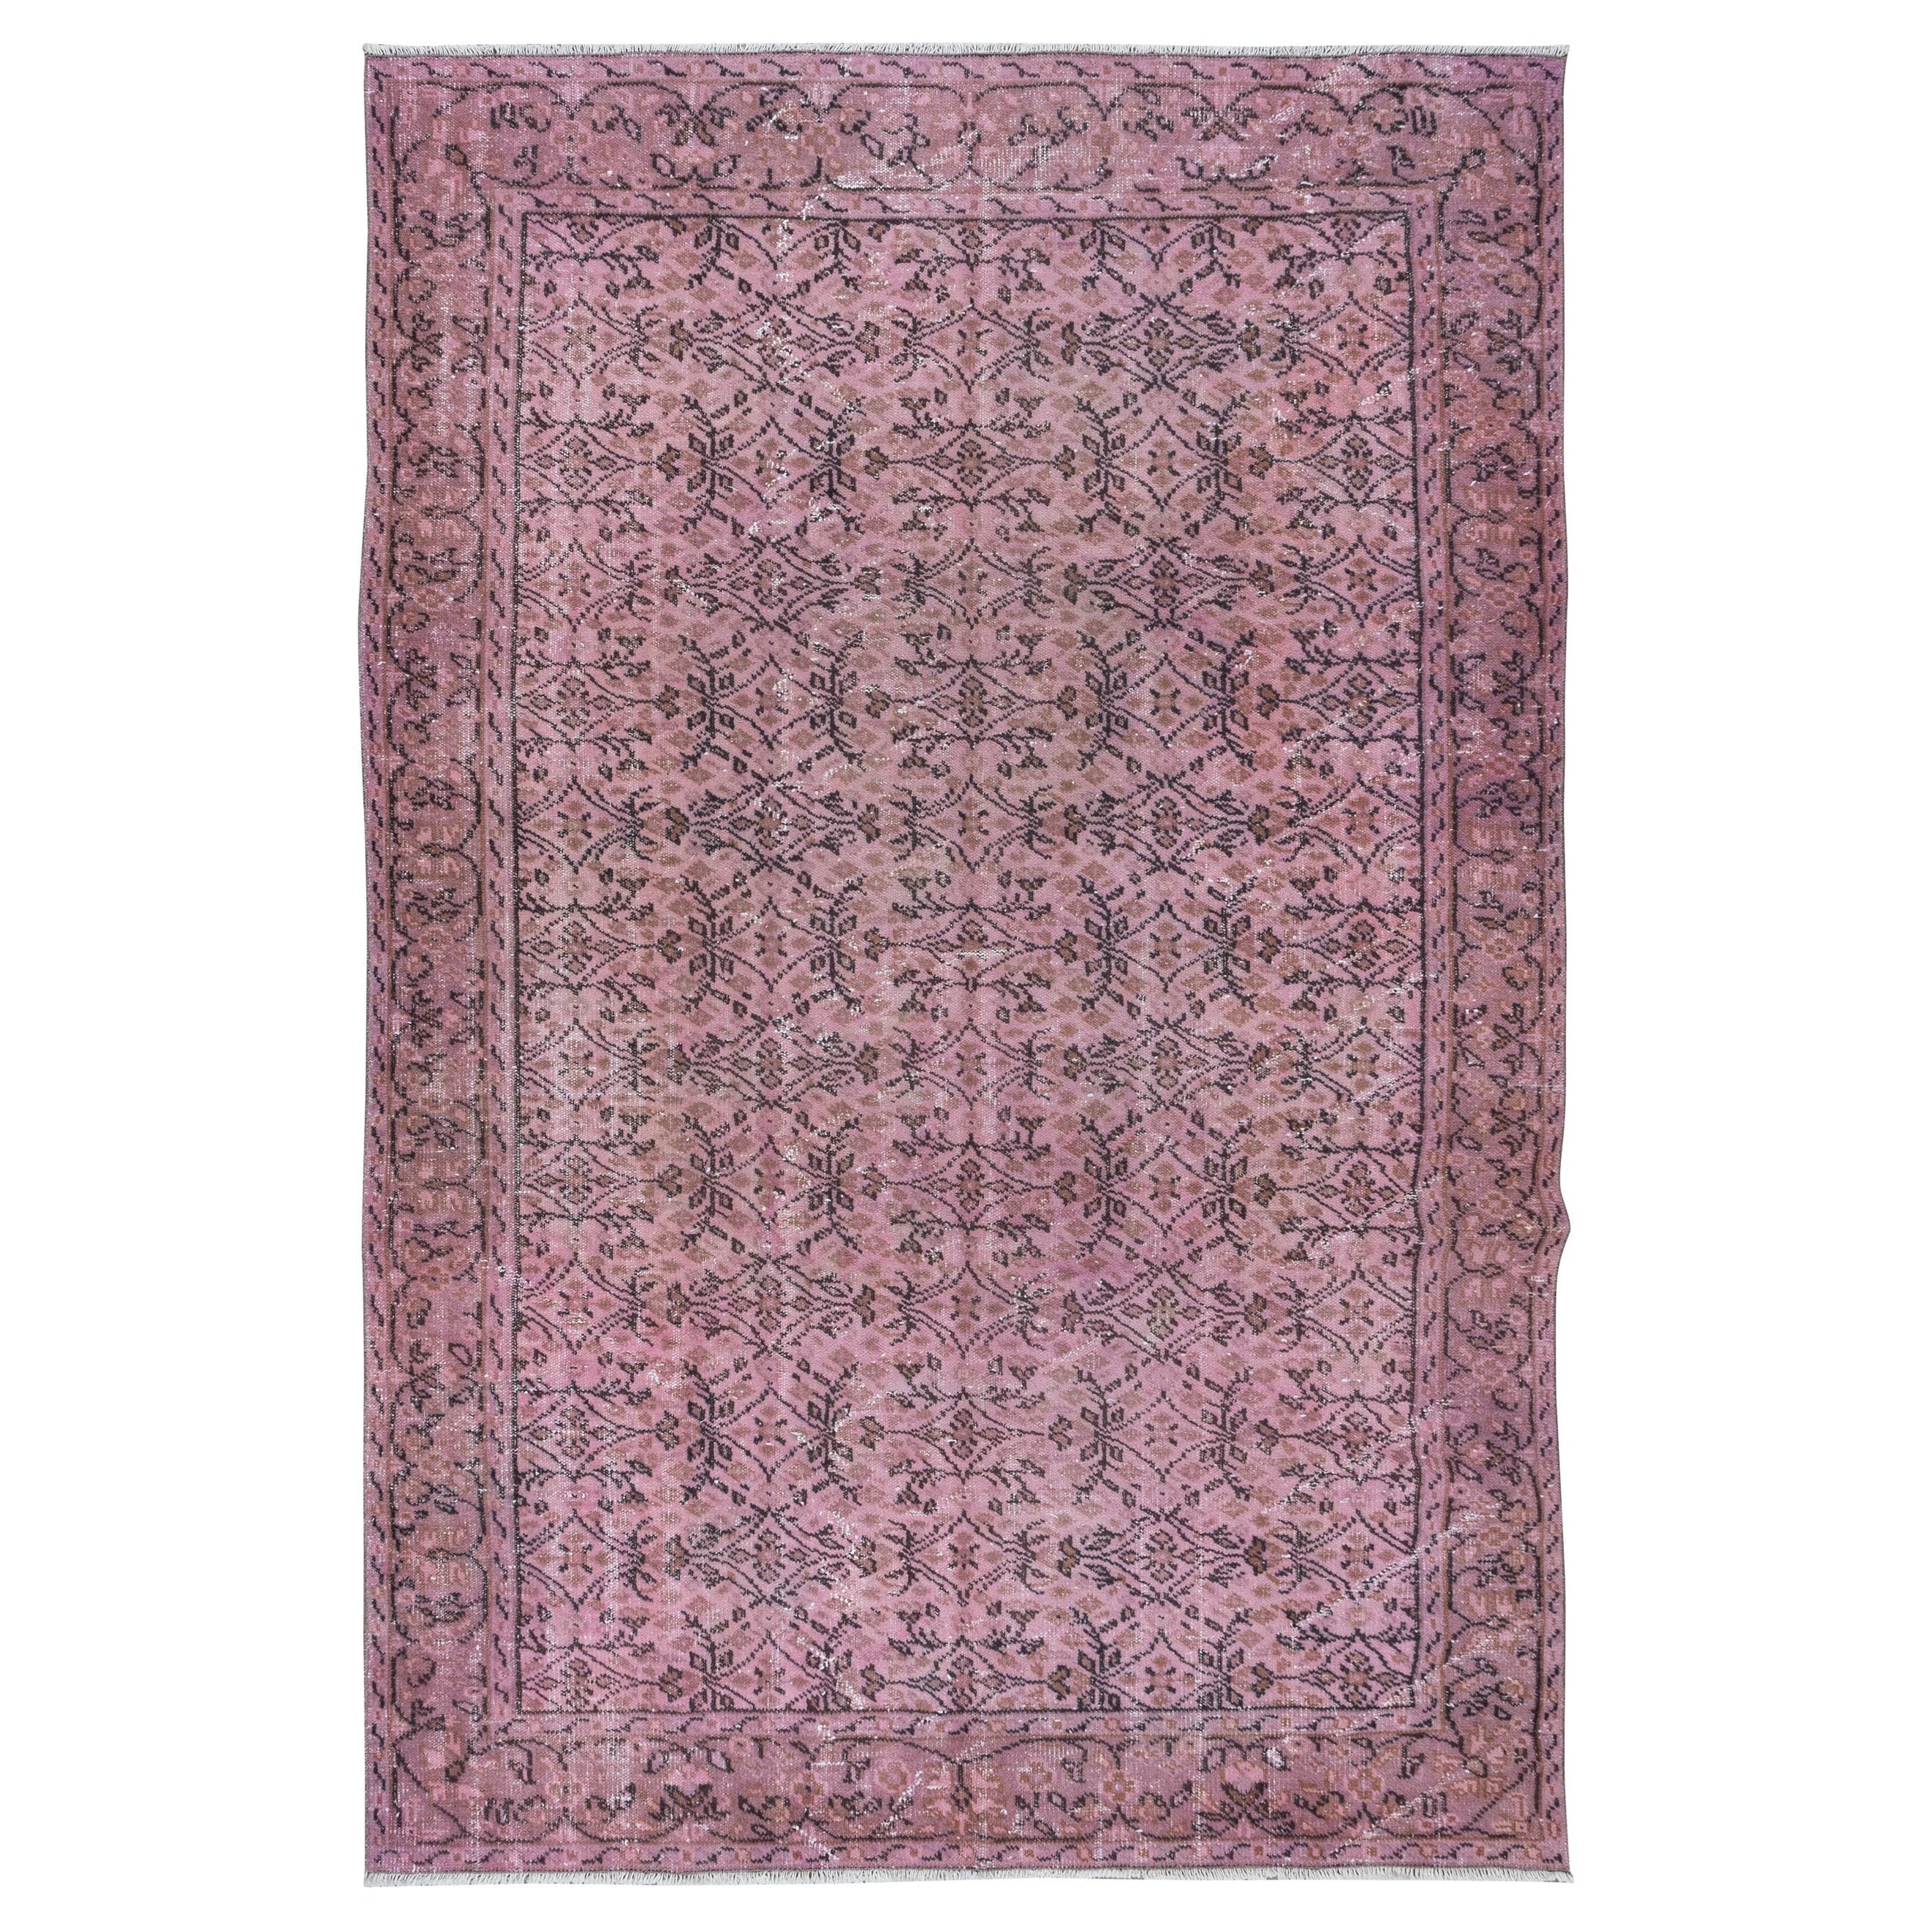 6.6x10 Ft Handmade Floral Pattern Floor Area Rug in Pink, Modern Turkish Carpet